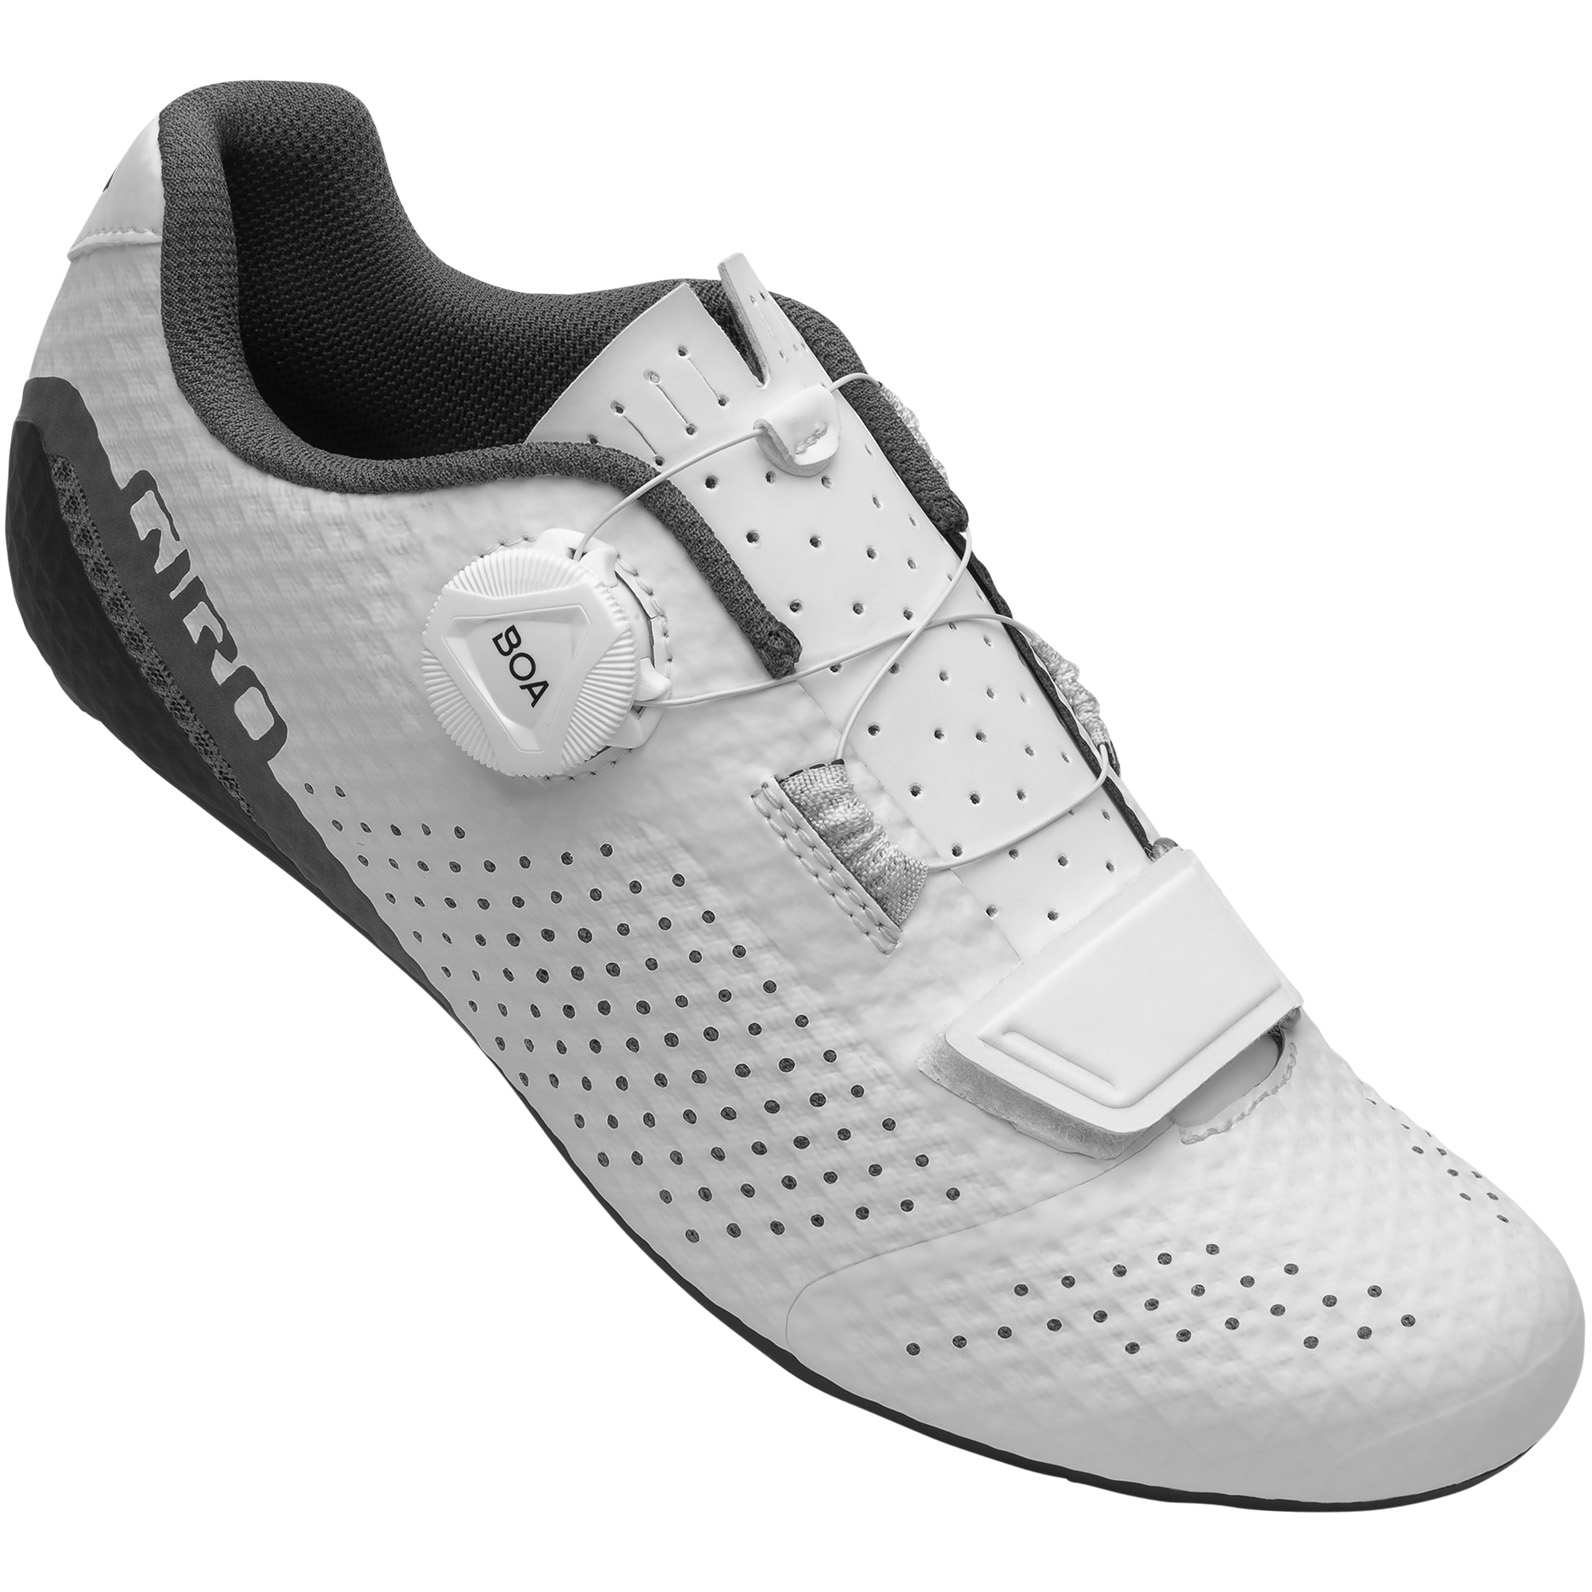 Image of Giro Cadet Road Shoes Women - white